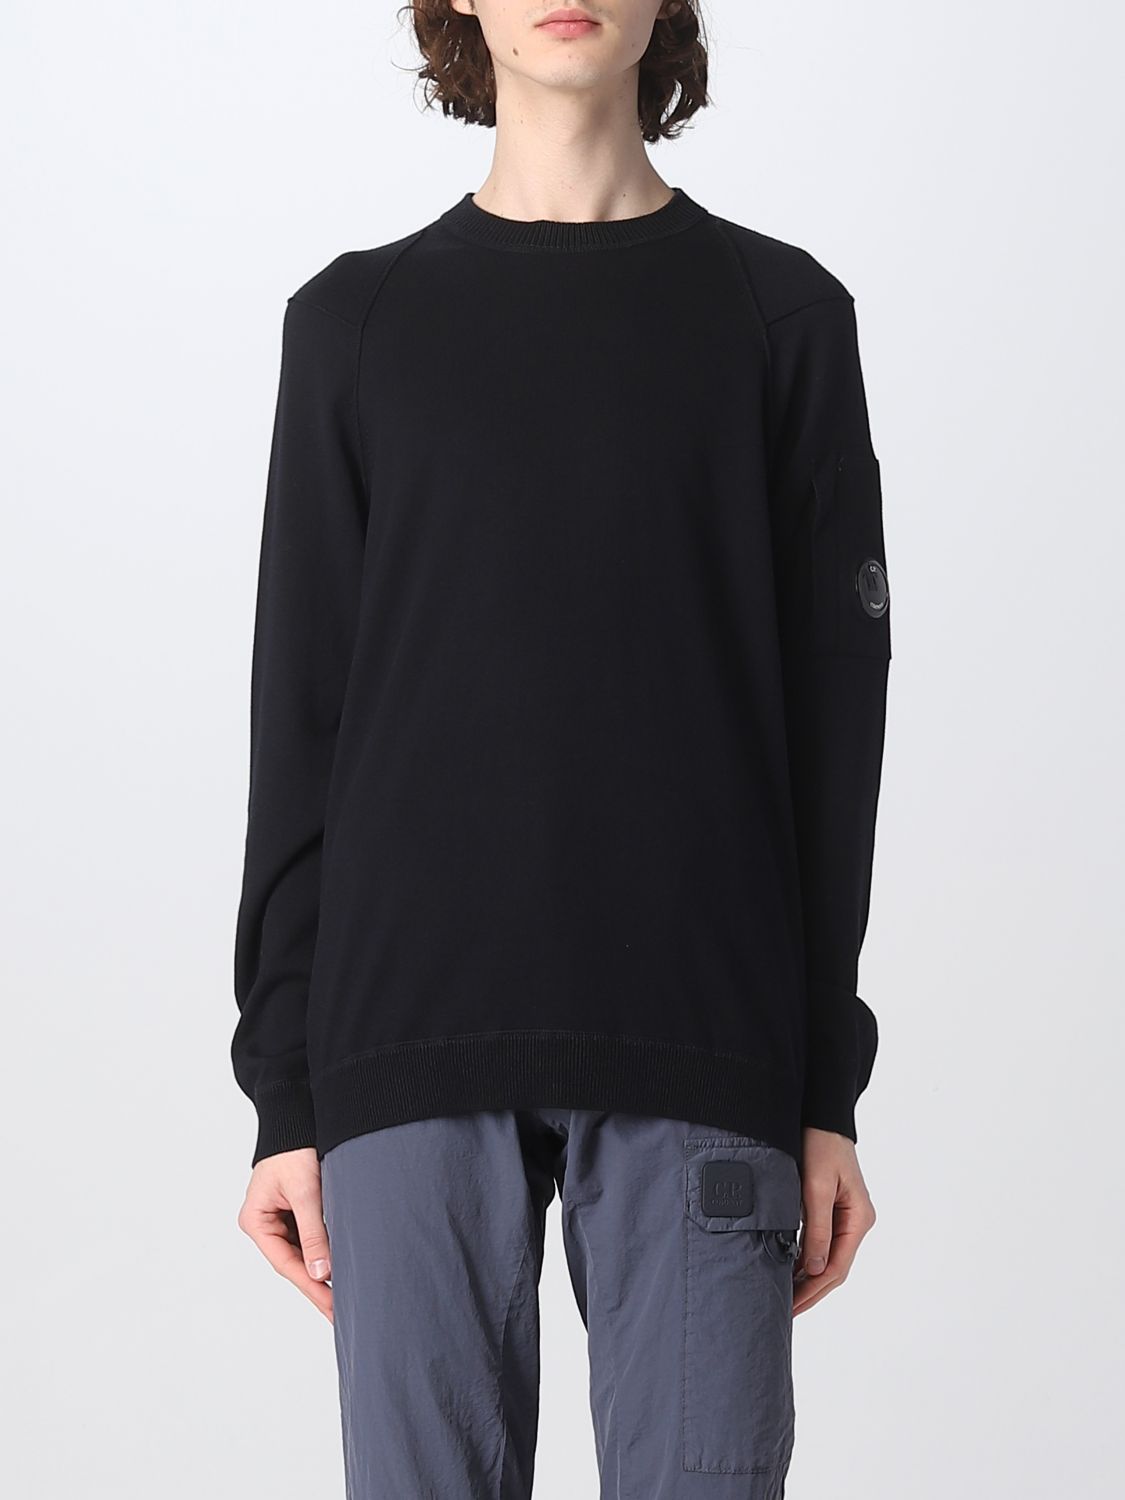 C.P. COMPANY: sweater for man - Black | C.p. Company sweater ...